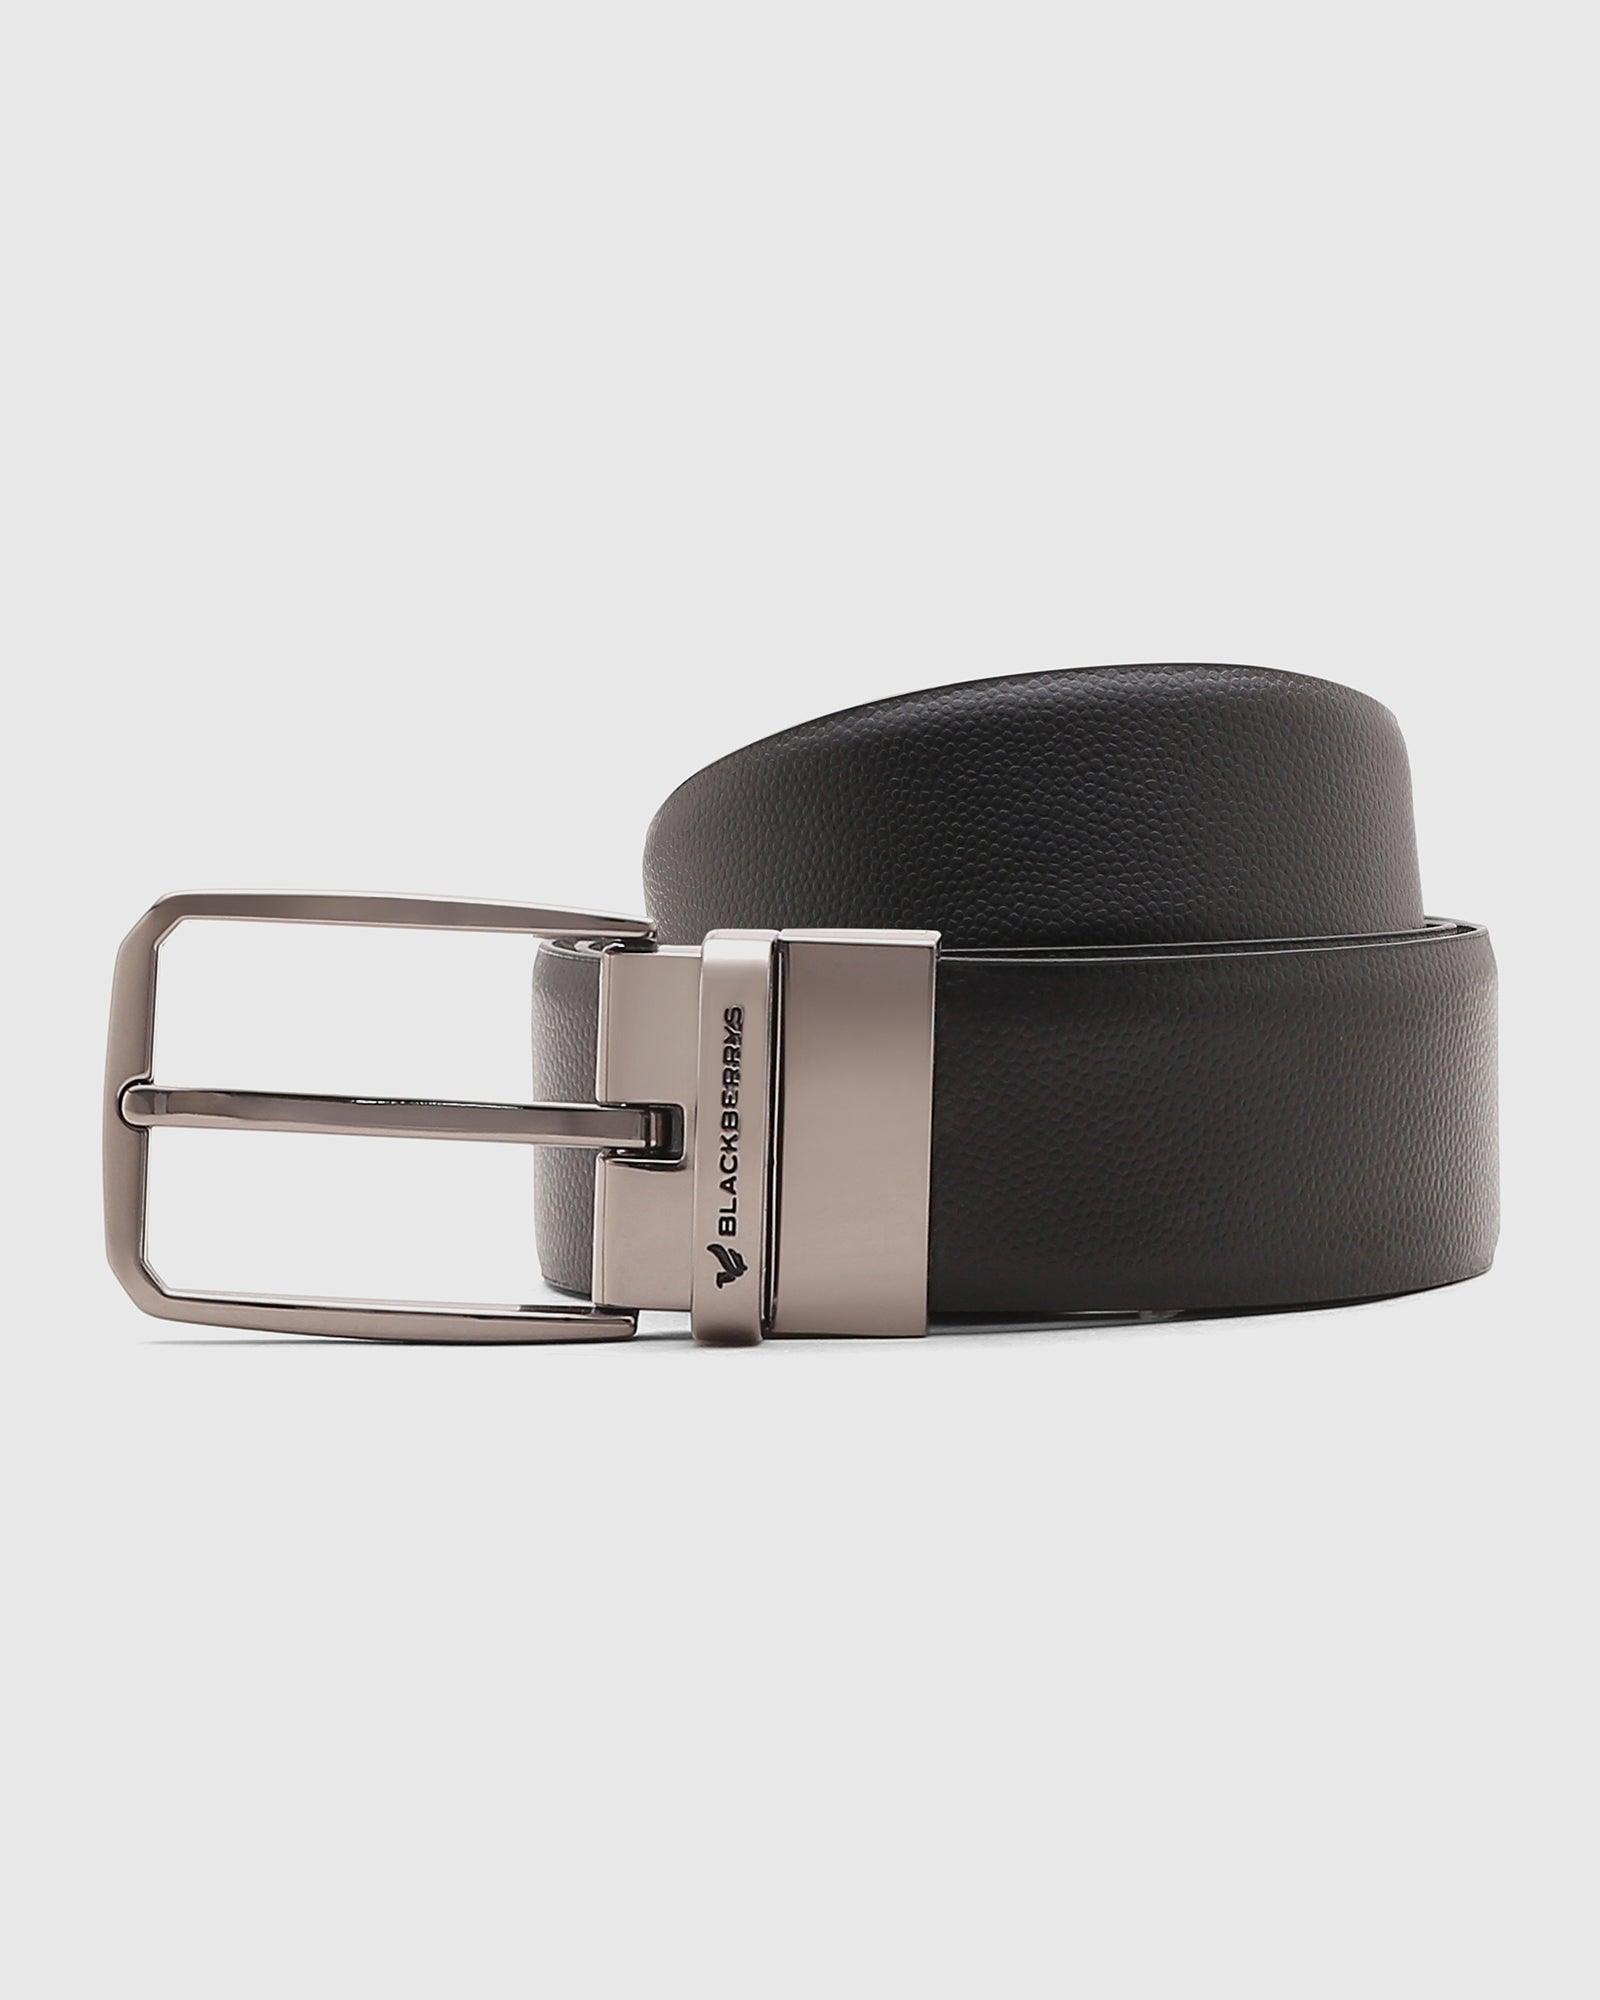 leather-reversible-black-brown-textured-belt---stefano